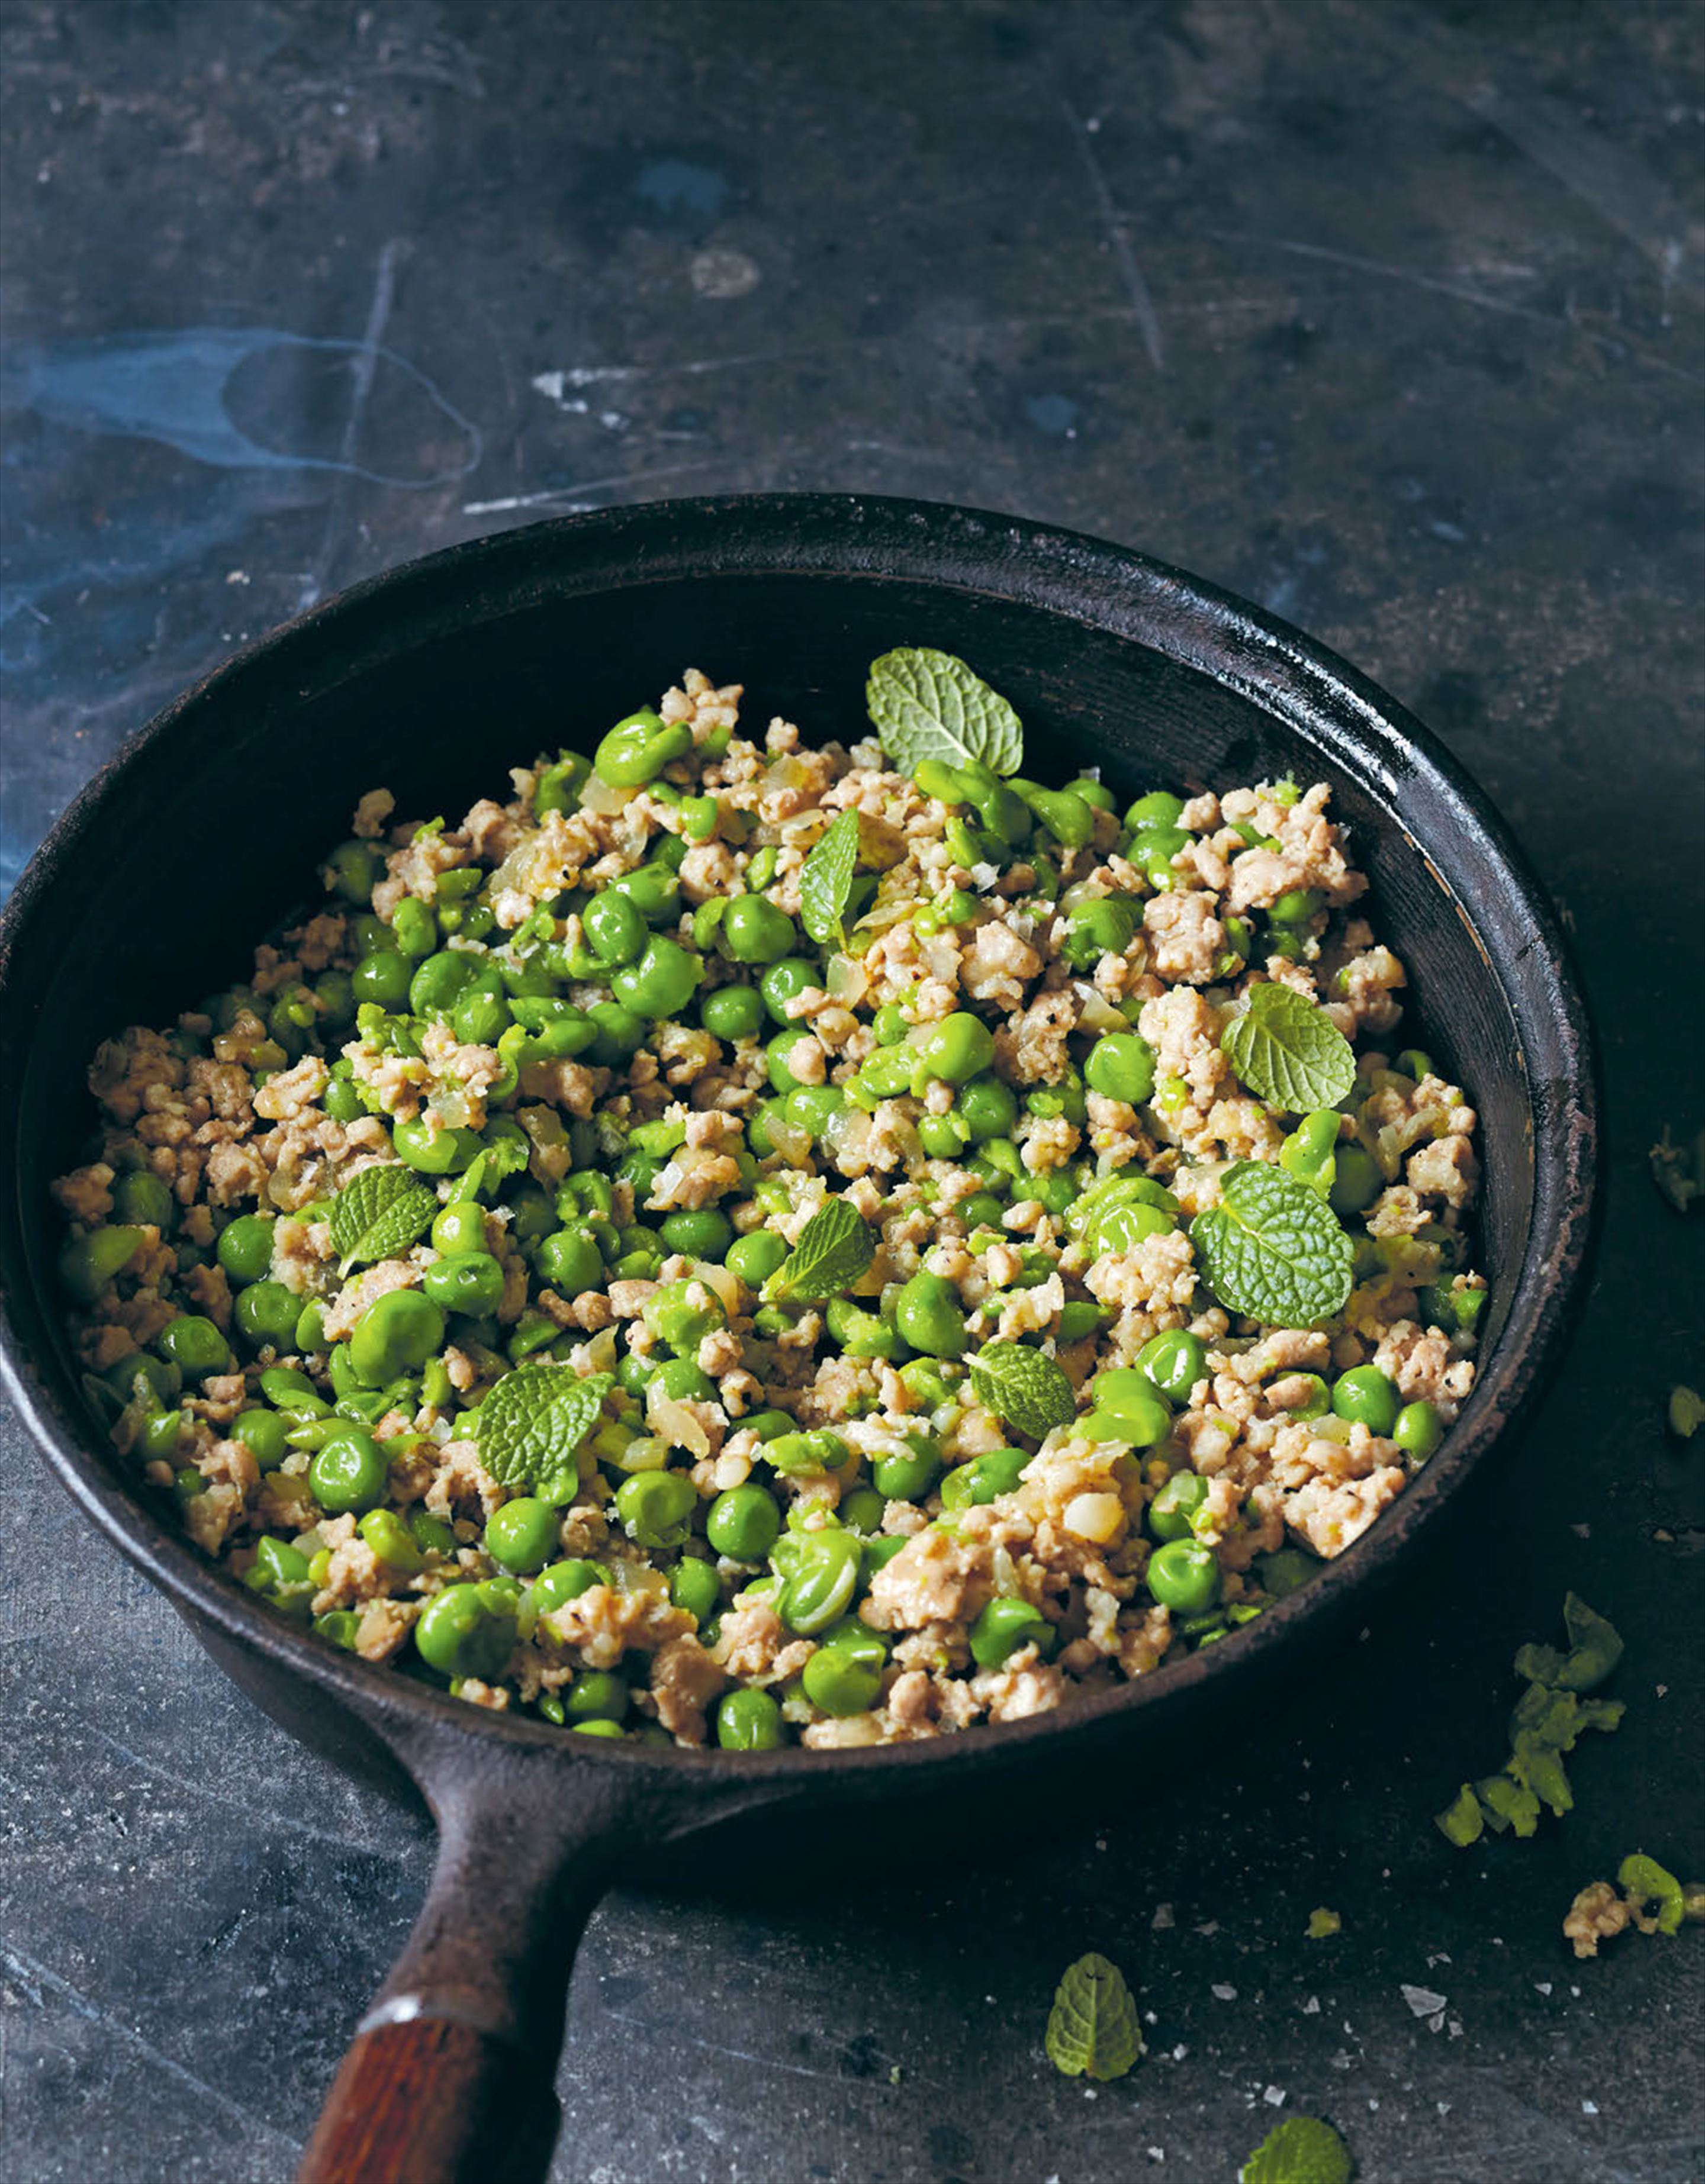 Peas in the pan